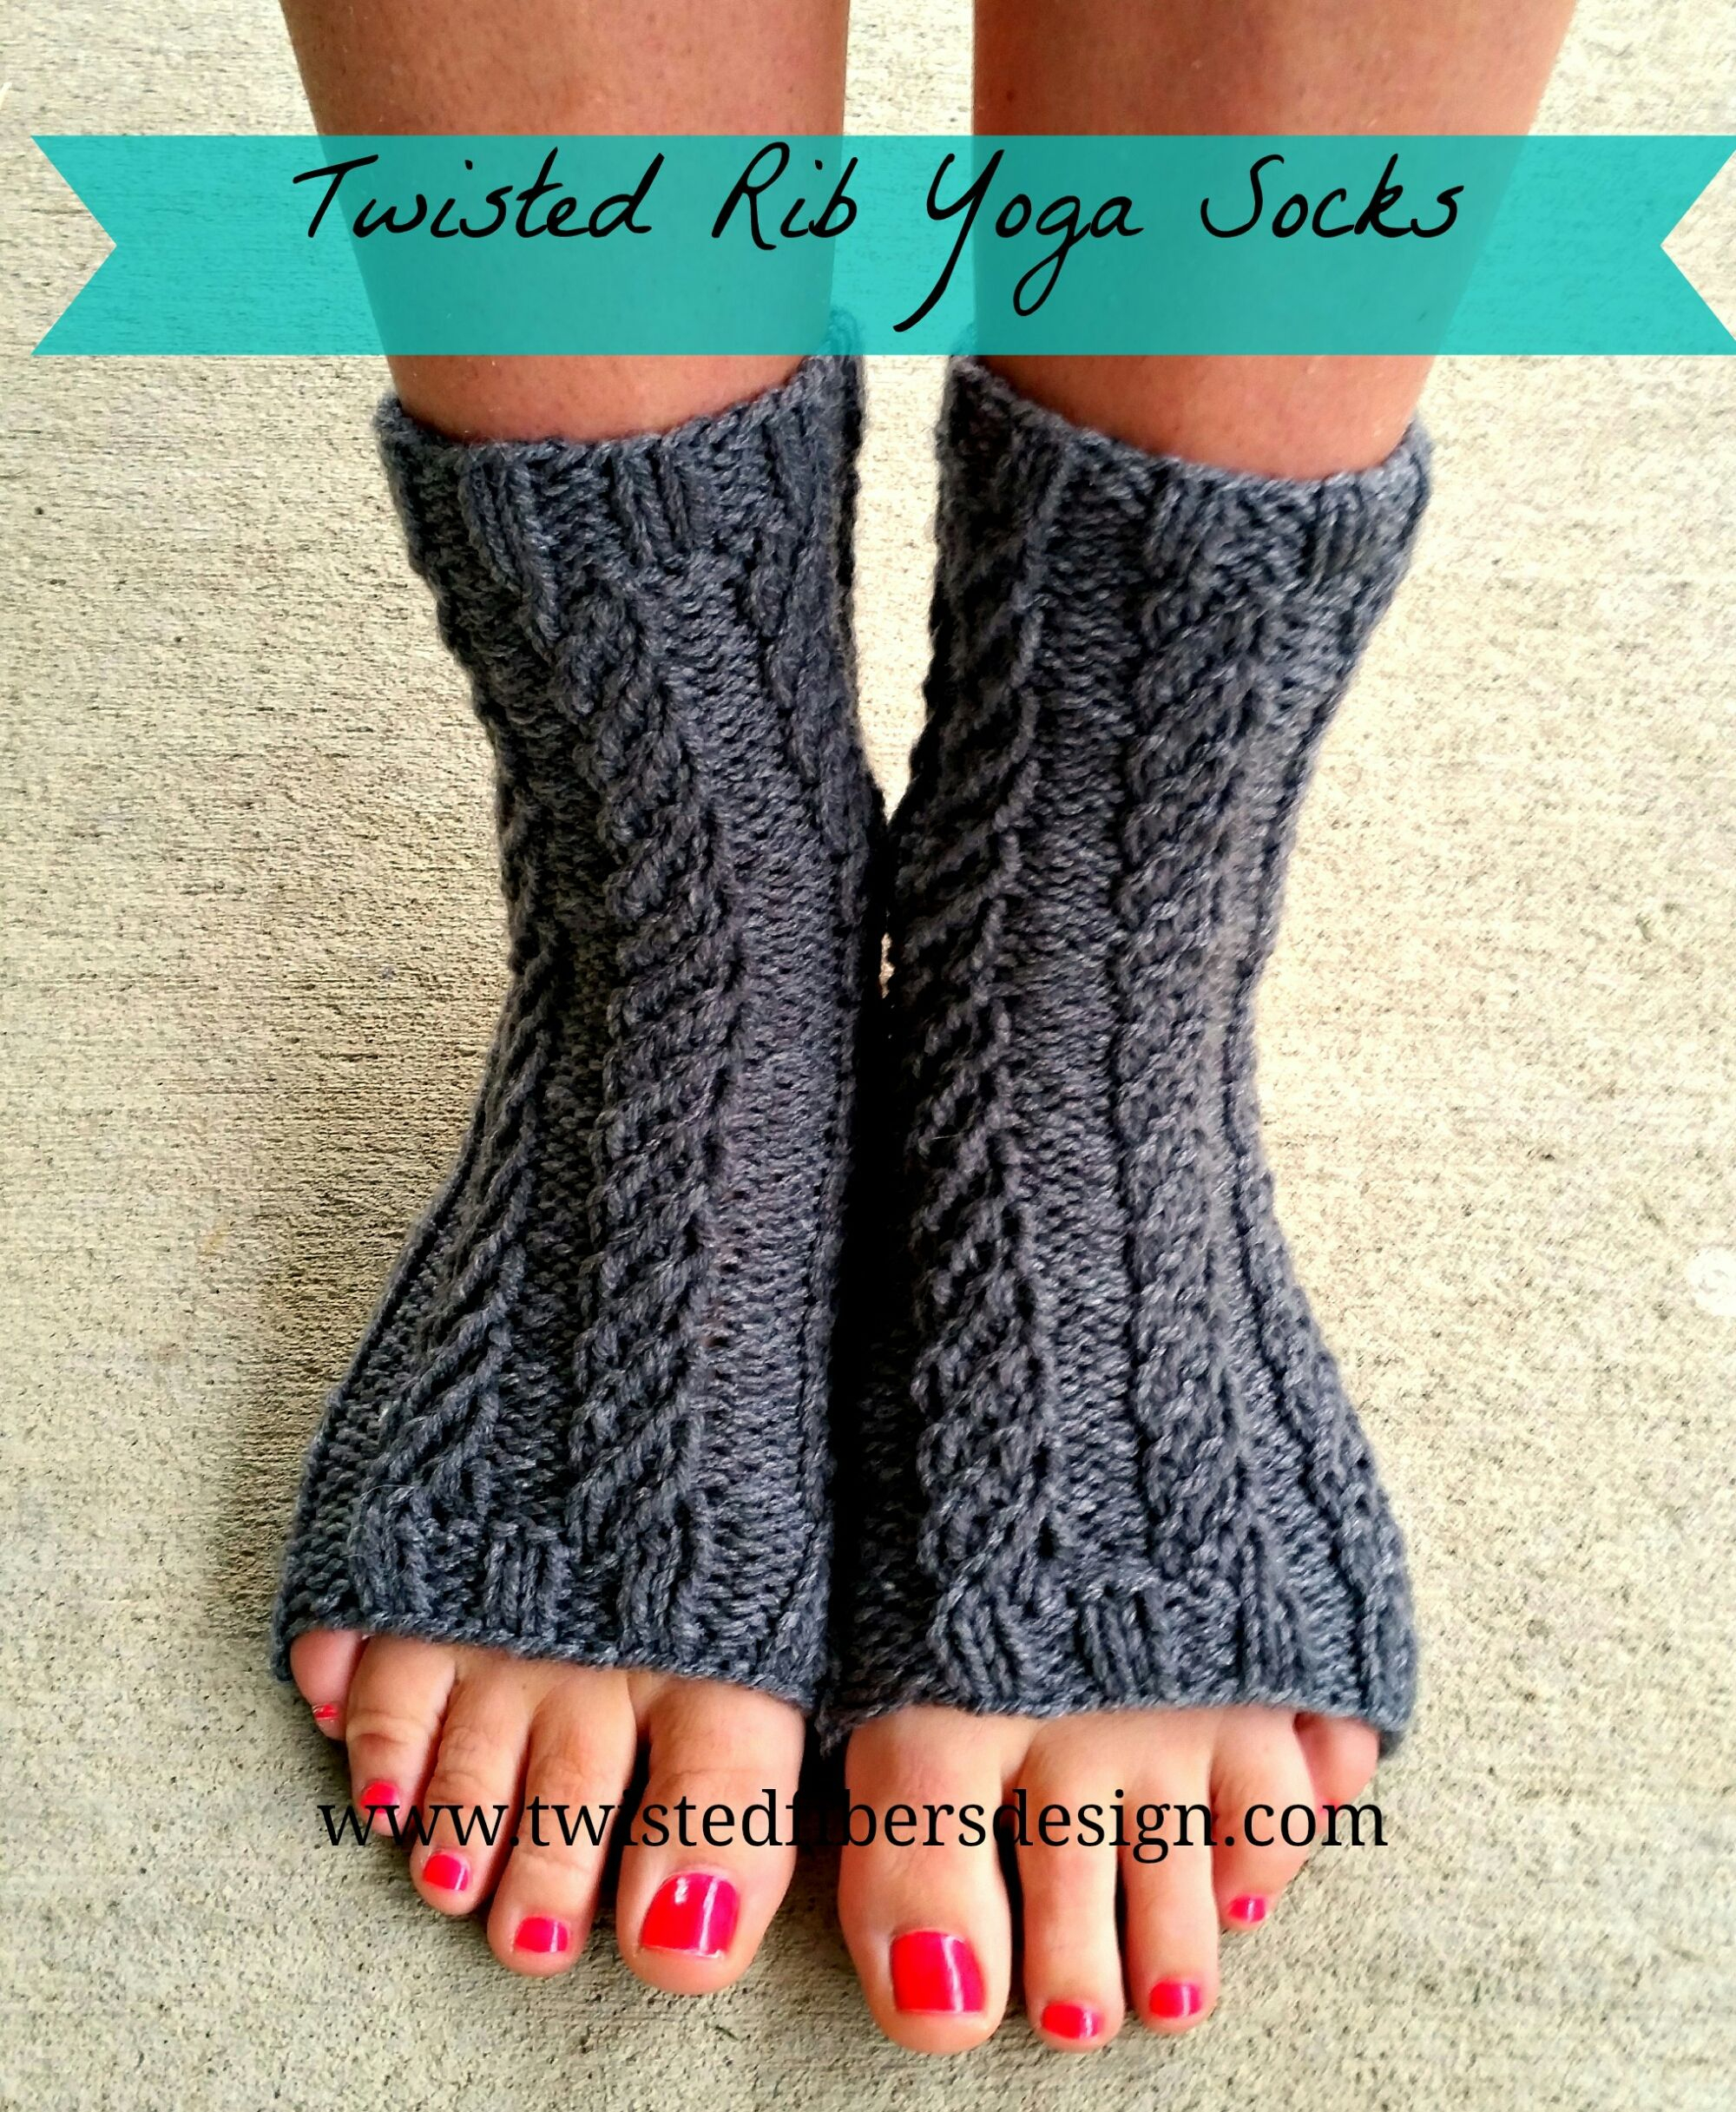 Free Crochet Yoga Socks Pattern Yoga Socks Free Knitting Pattern Free Patterns Pinterest